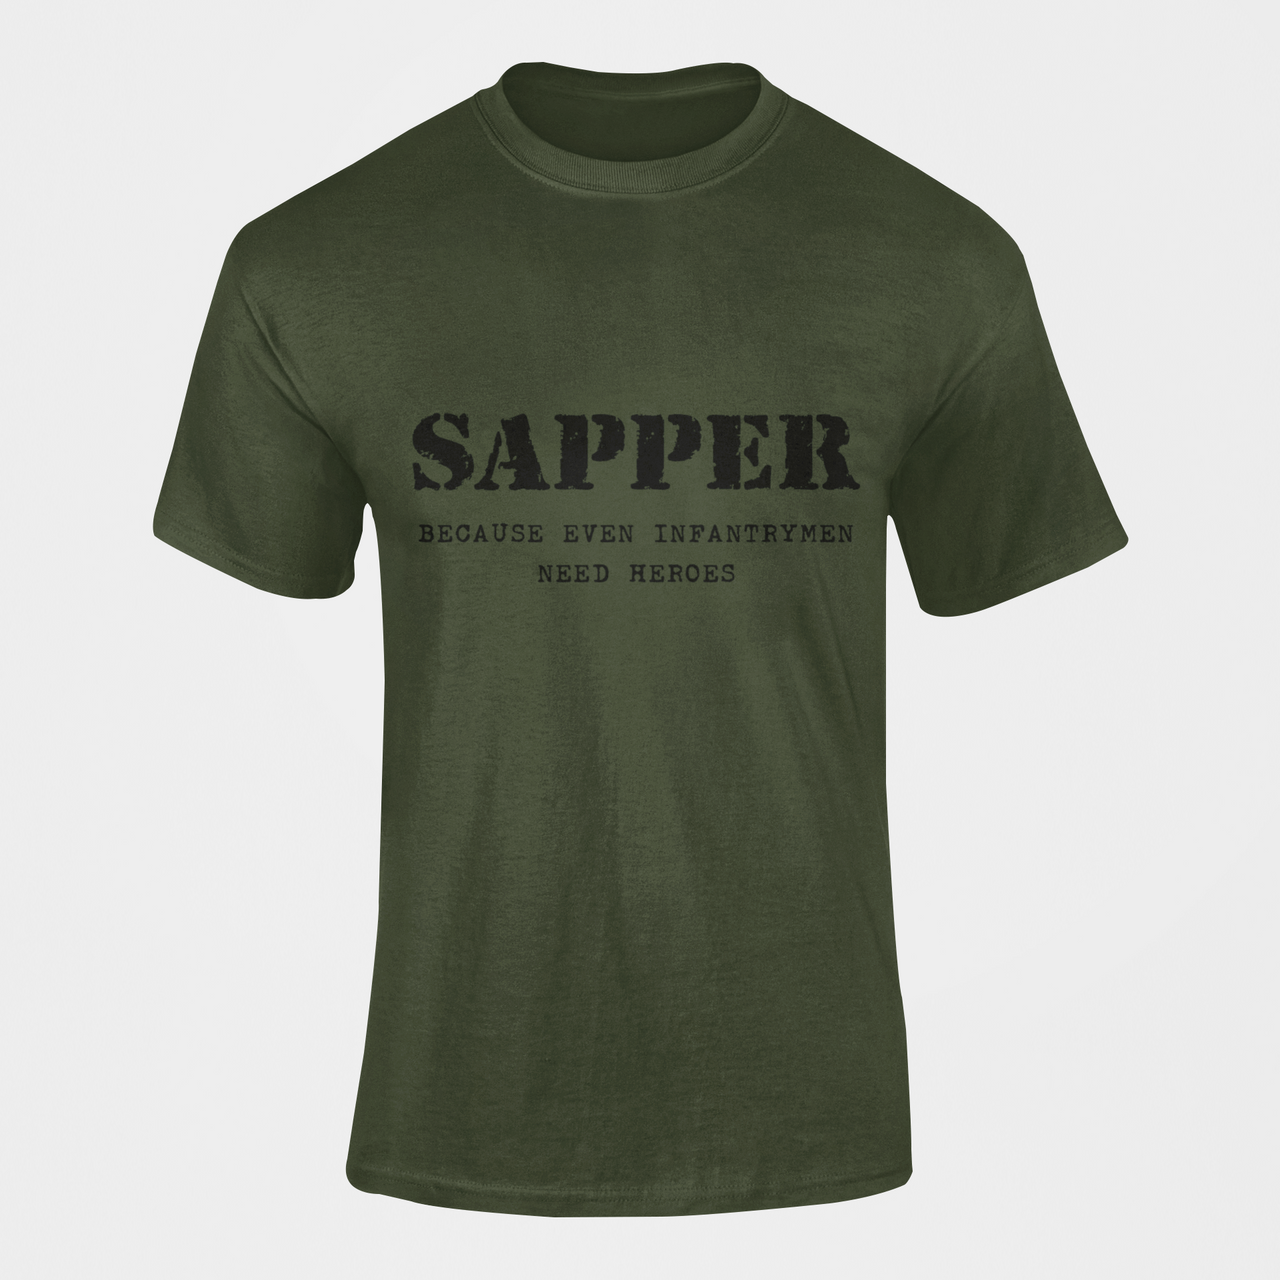 Sapper T-shirt - Infantrymen Need Heroes (Men)